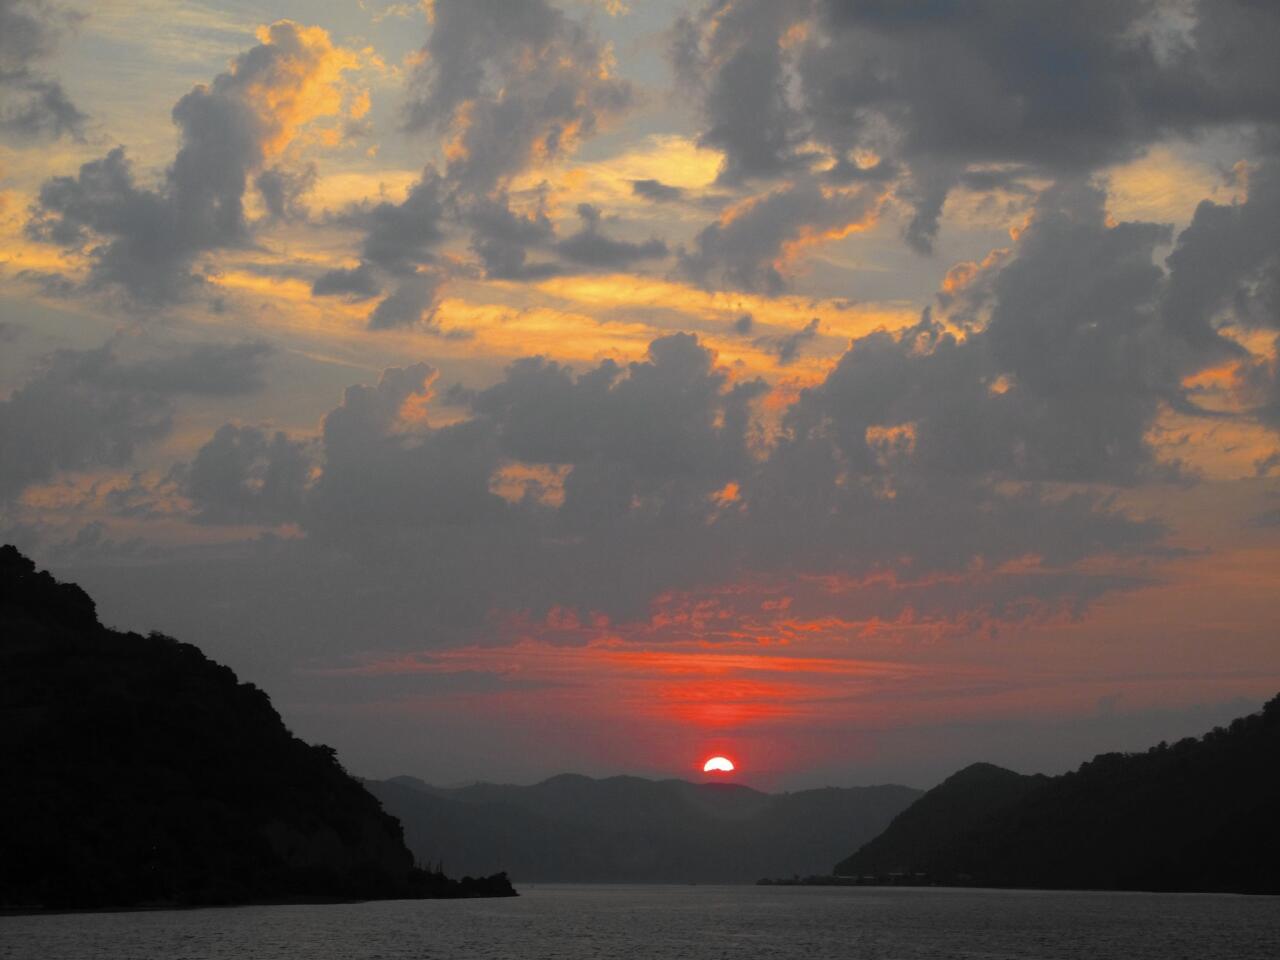 Sunrise on the Danube